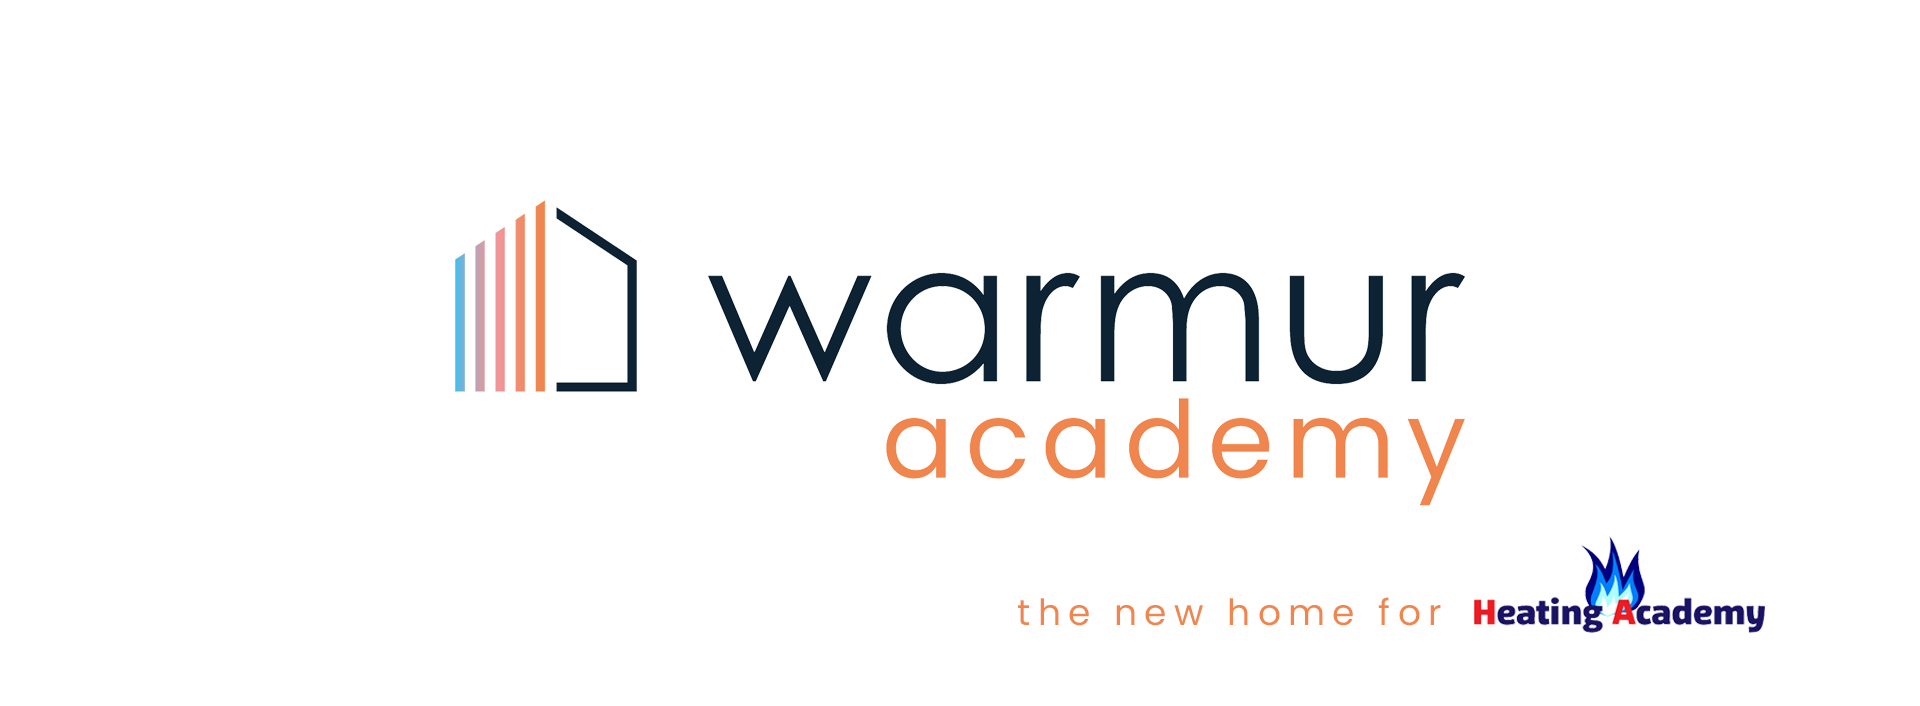 Warmur Academy